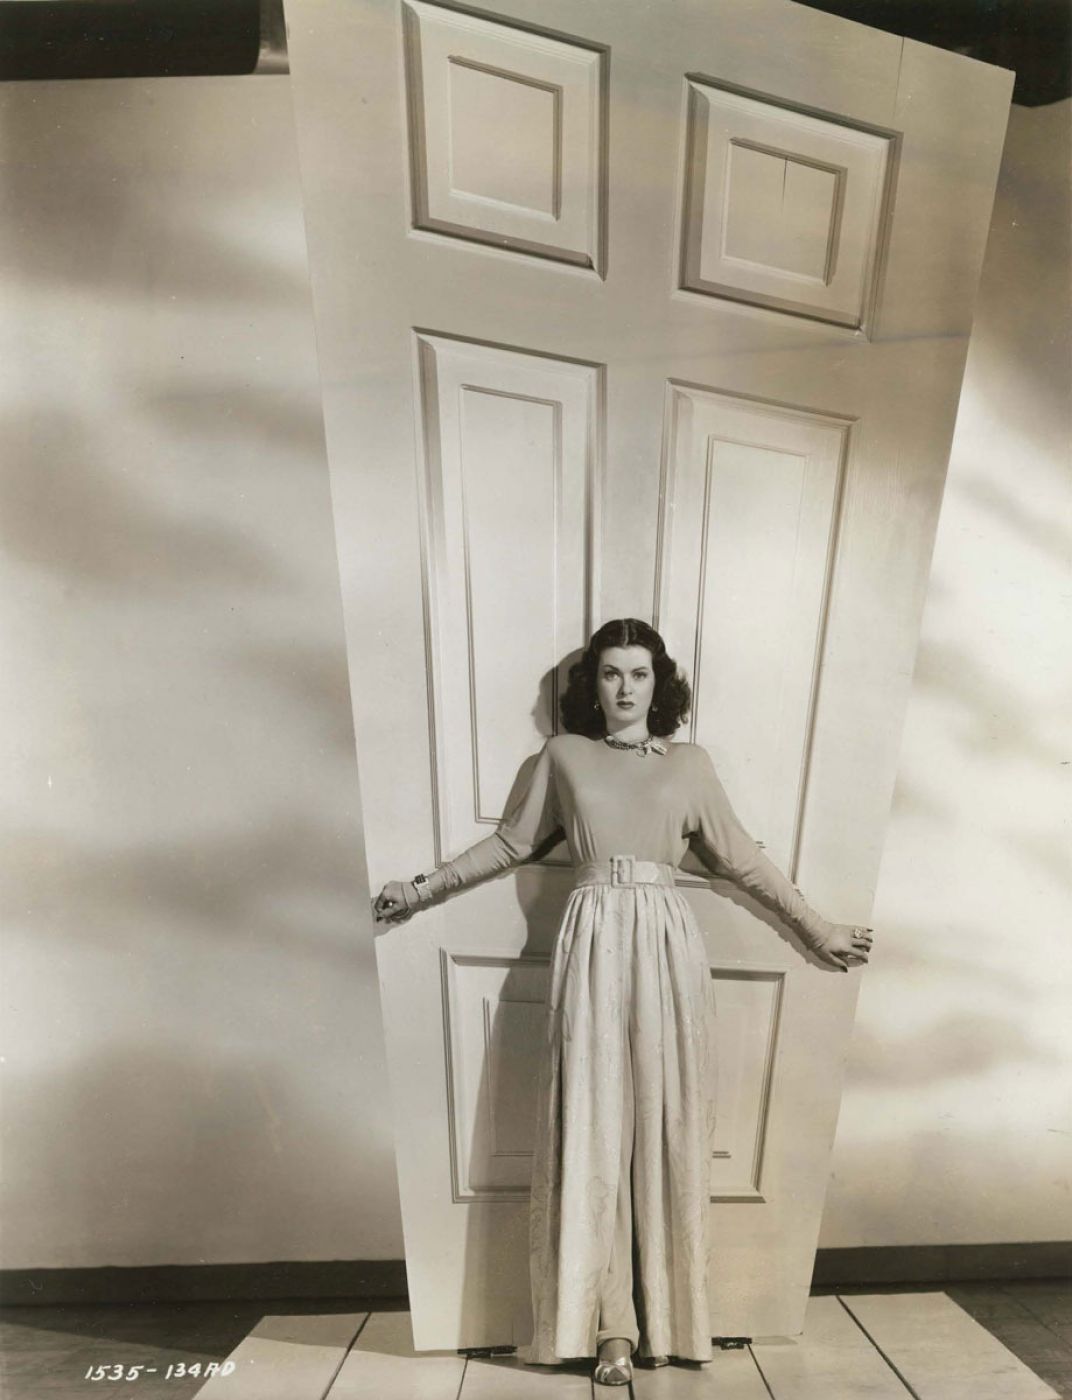 Anonymous, “Joan Bennett in "Secret Beyond the Door..." by Fritz Lang”, 1947